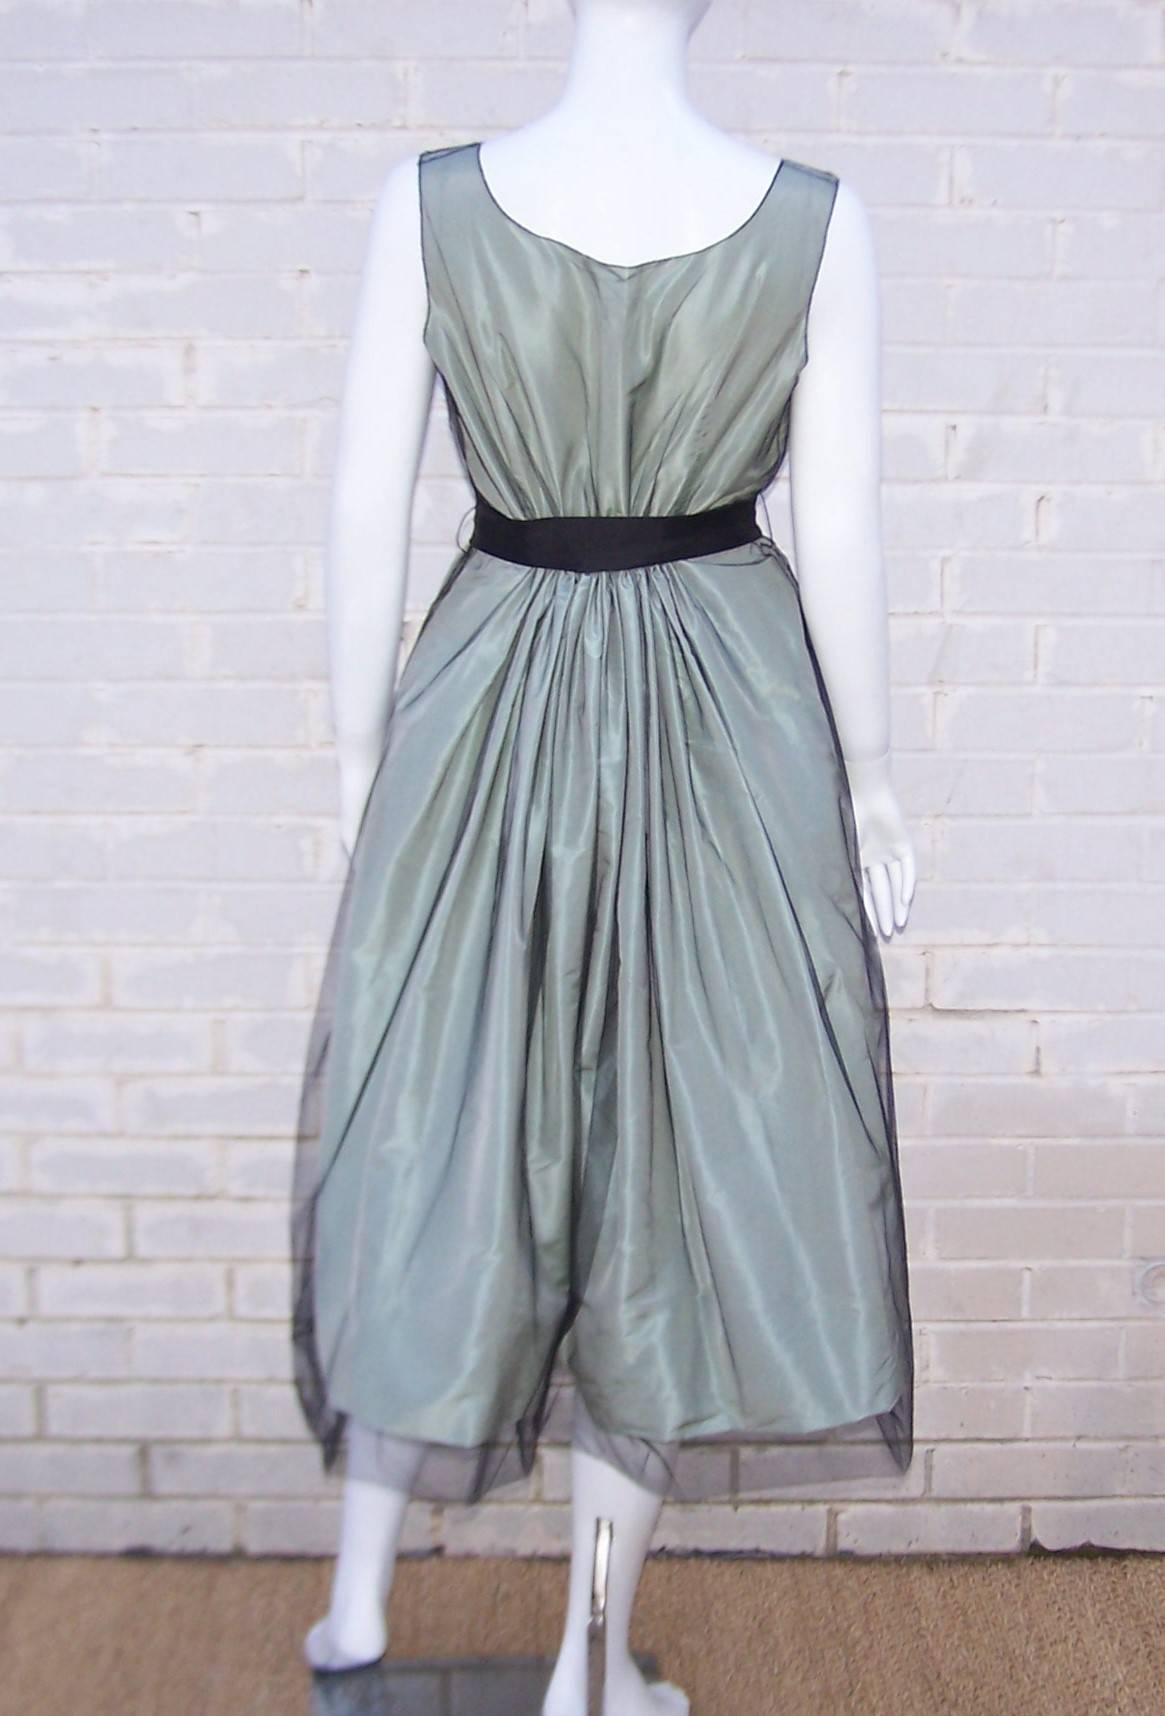 Women's C.2000 Oscar de la Renta Sage Green Taffeta Dress With Black Tulle Overlay 